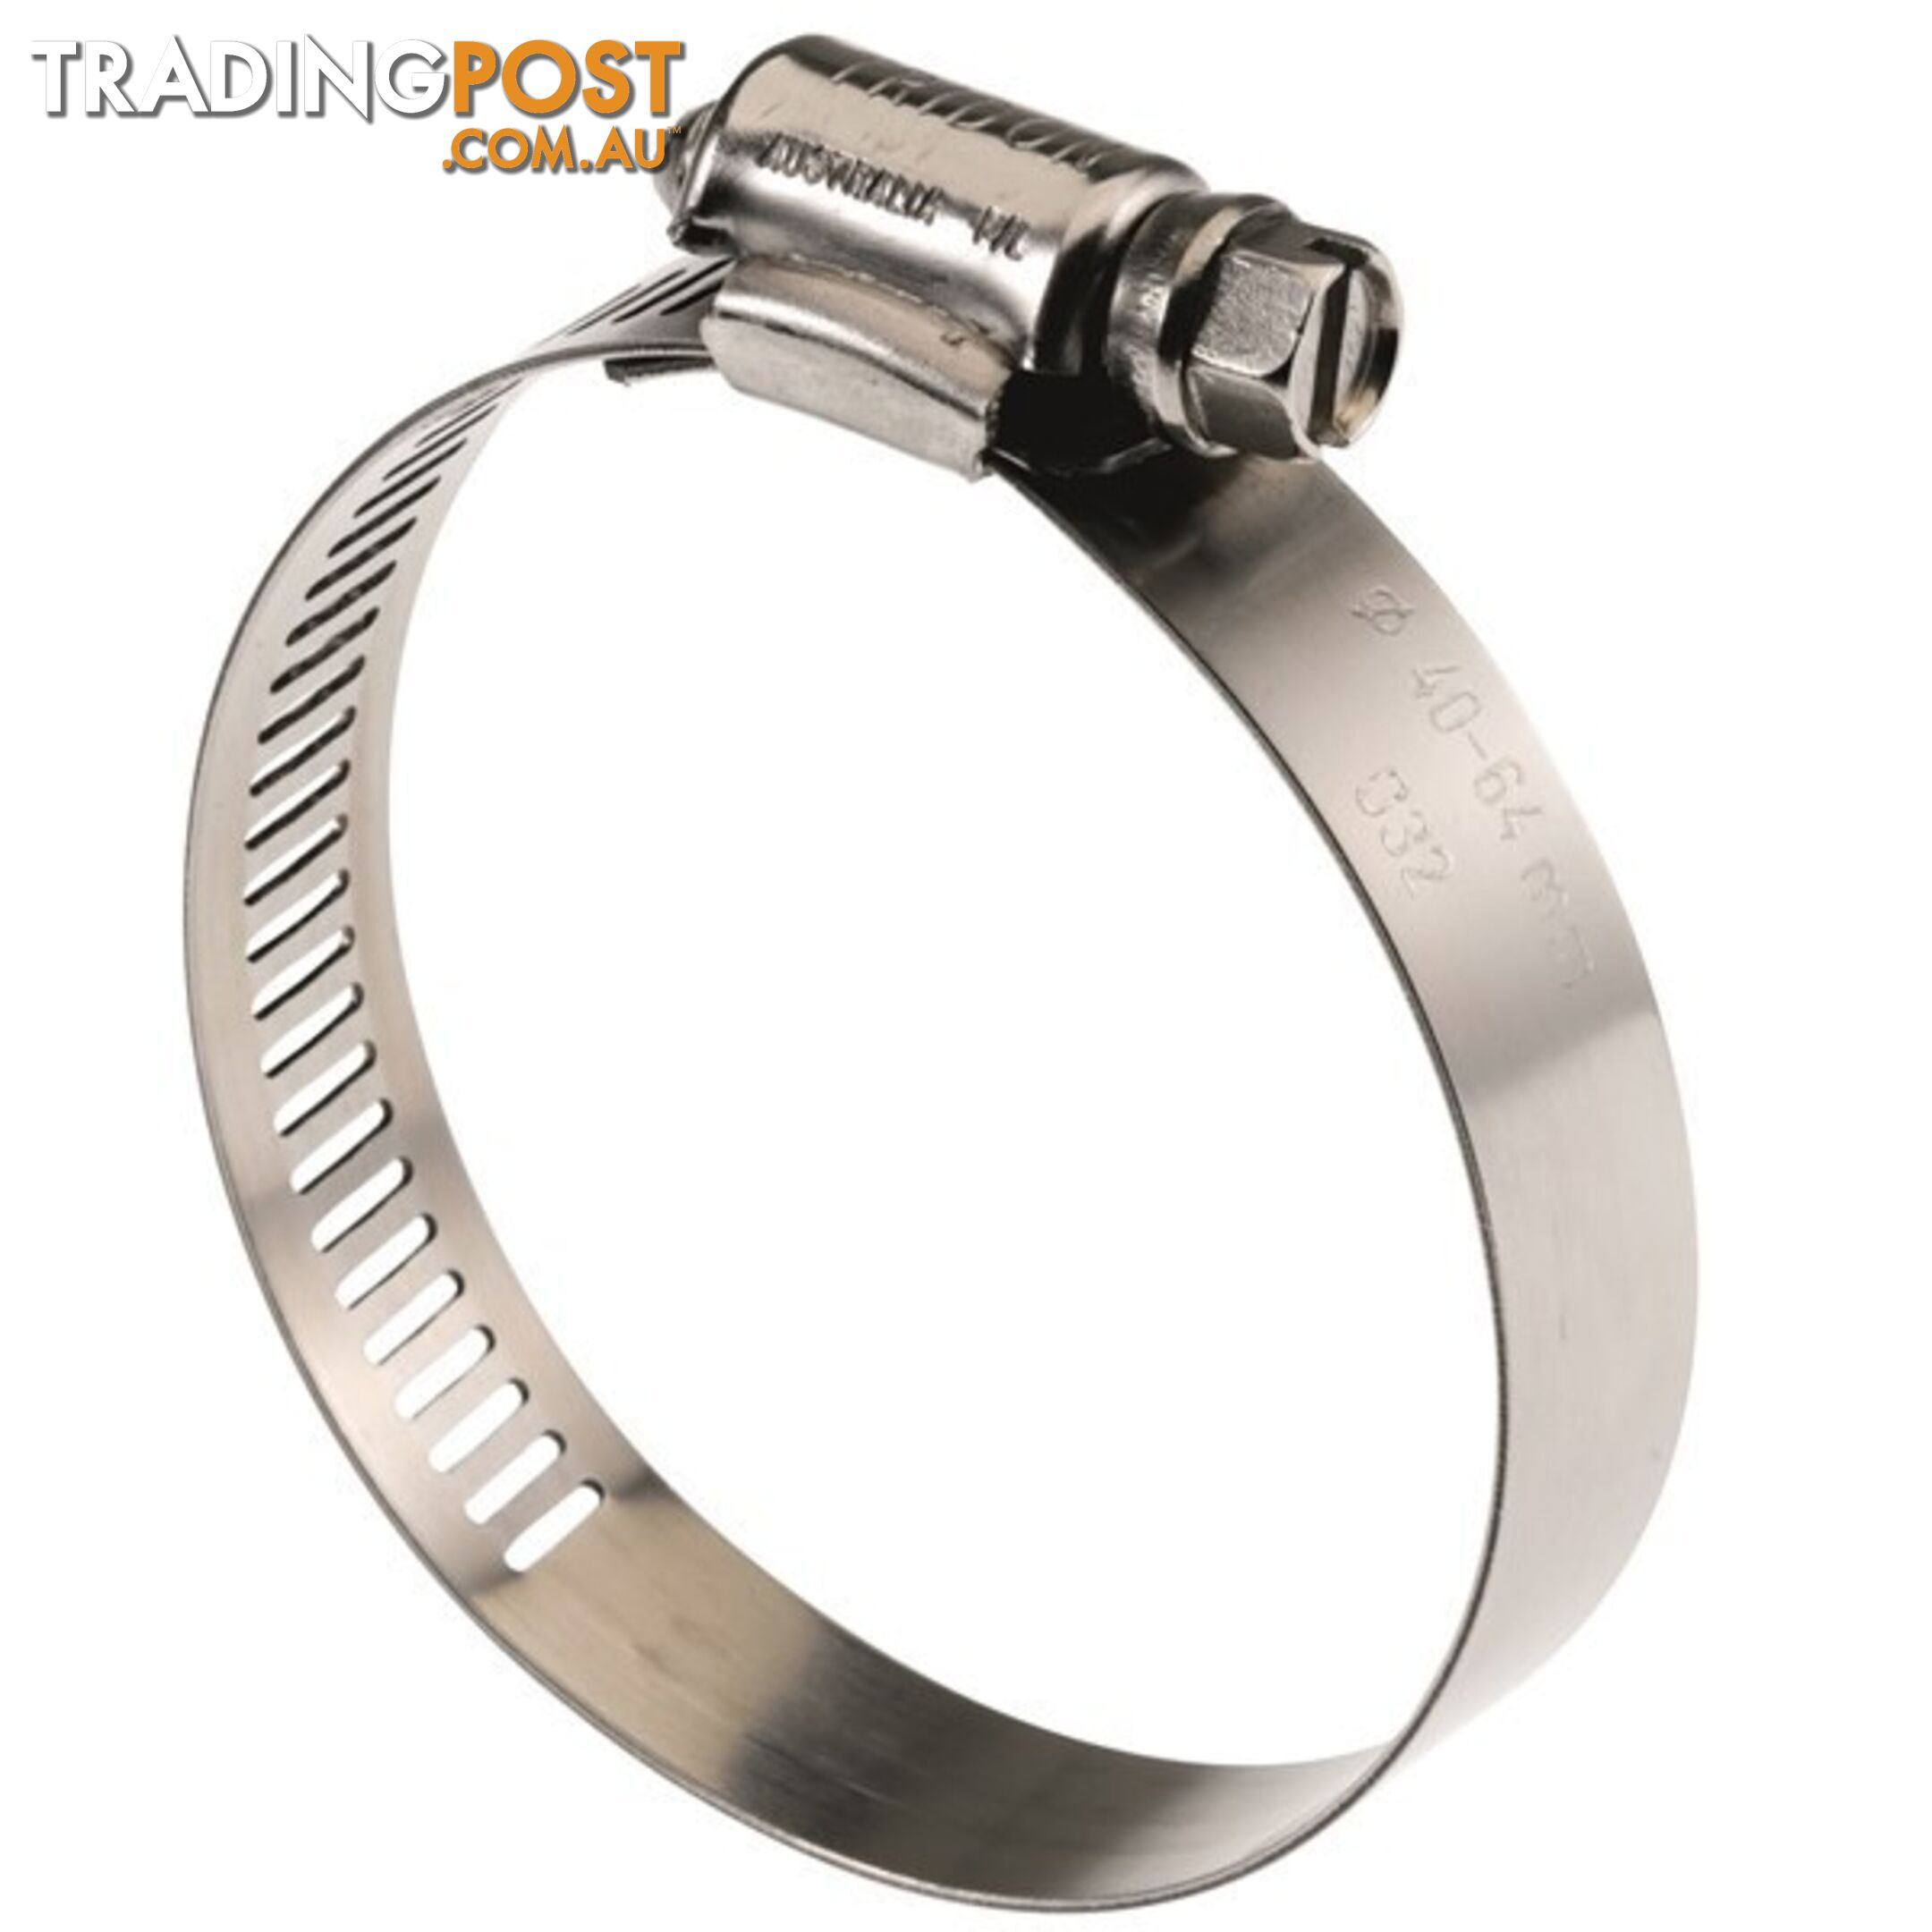 Tridon Full S. Steel Hose Clamps 117mm â 140mm Perforated Band 10pk SKU - HAS080P